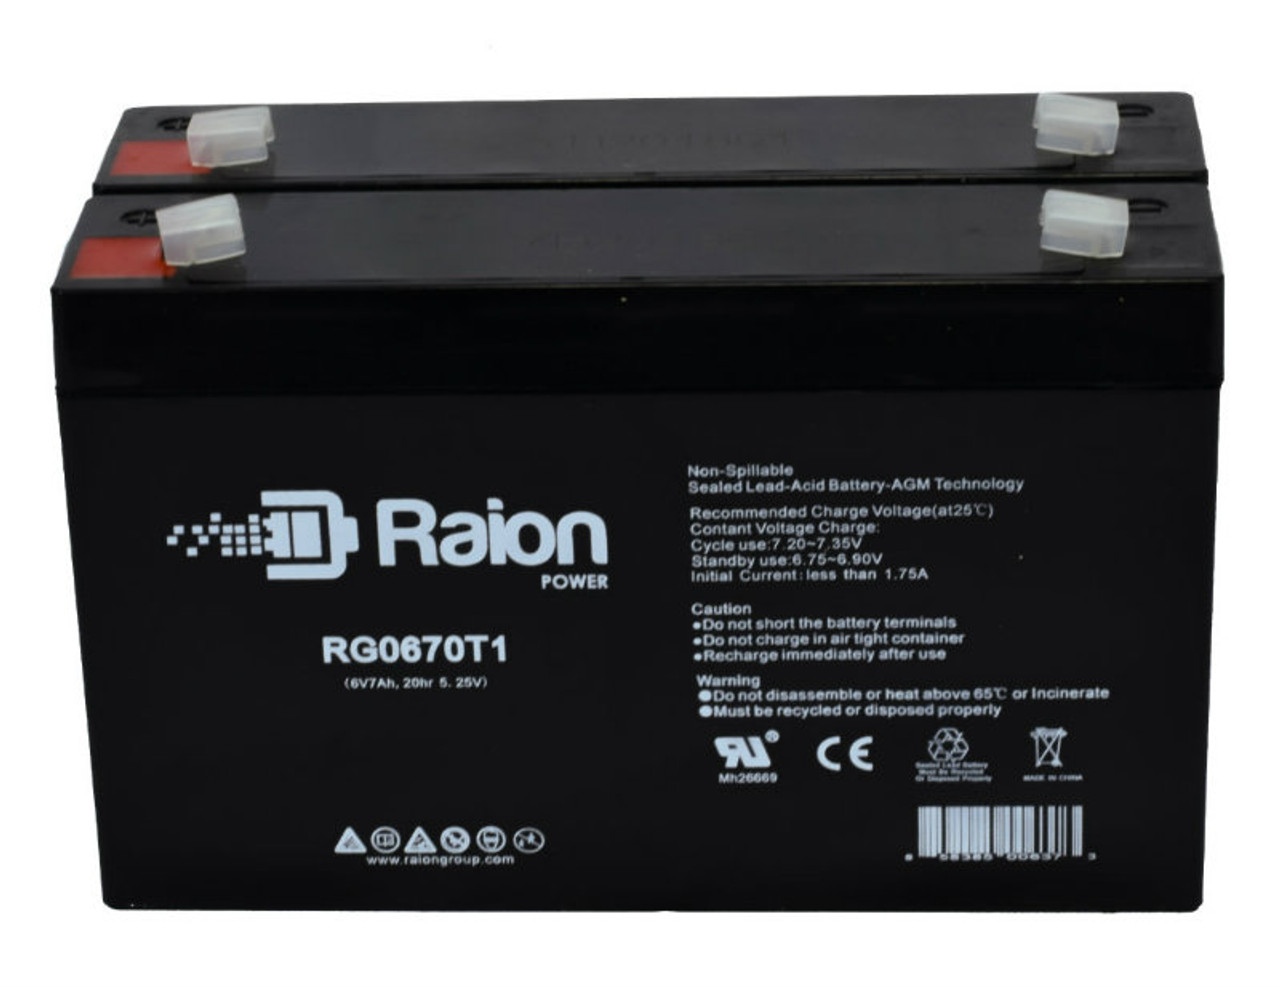 Raion Power RG0670T1 6V 7Ah Replacement Emergency Light Battery for Sonnenschein A206/6 - 2 Pack